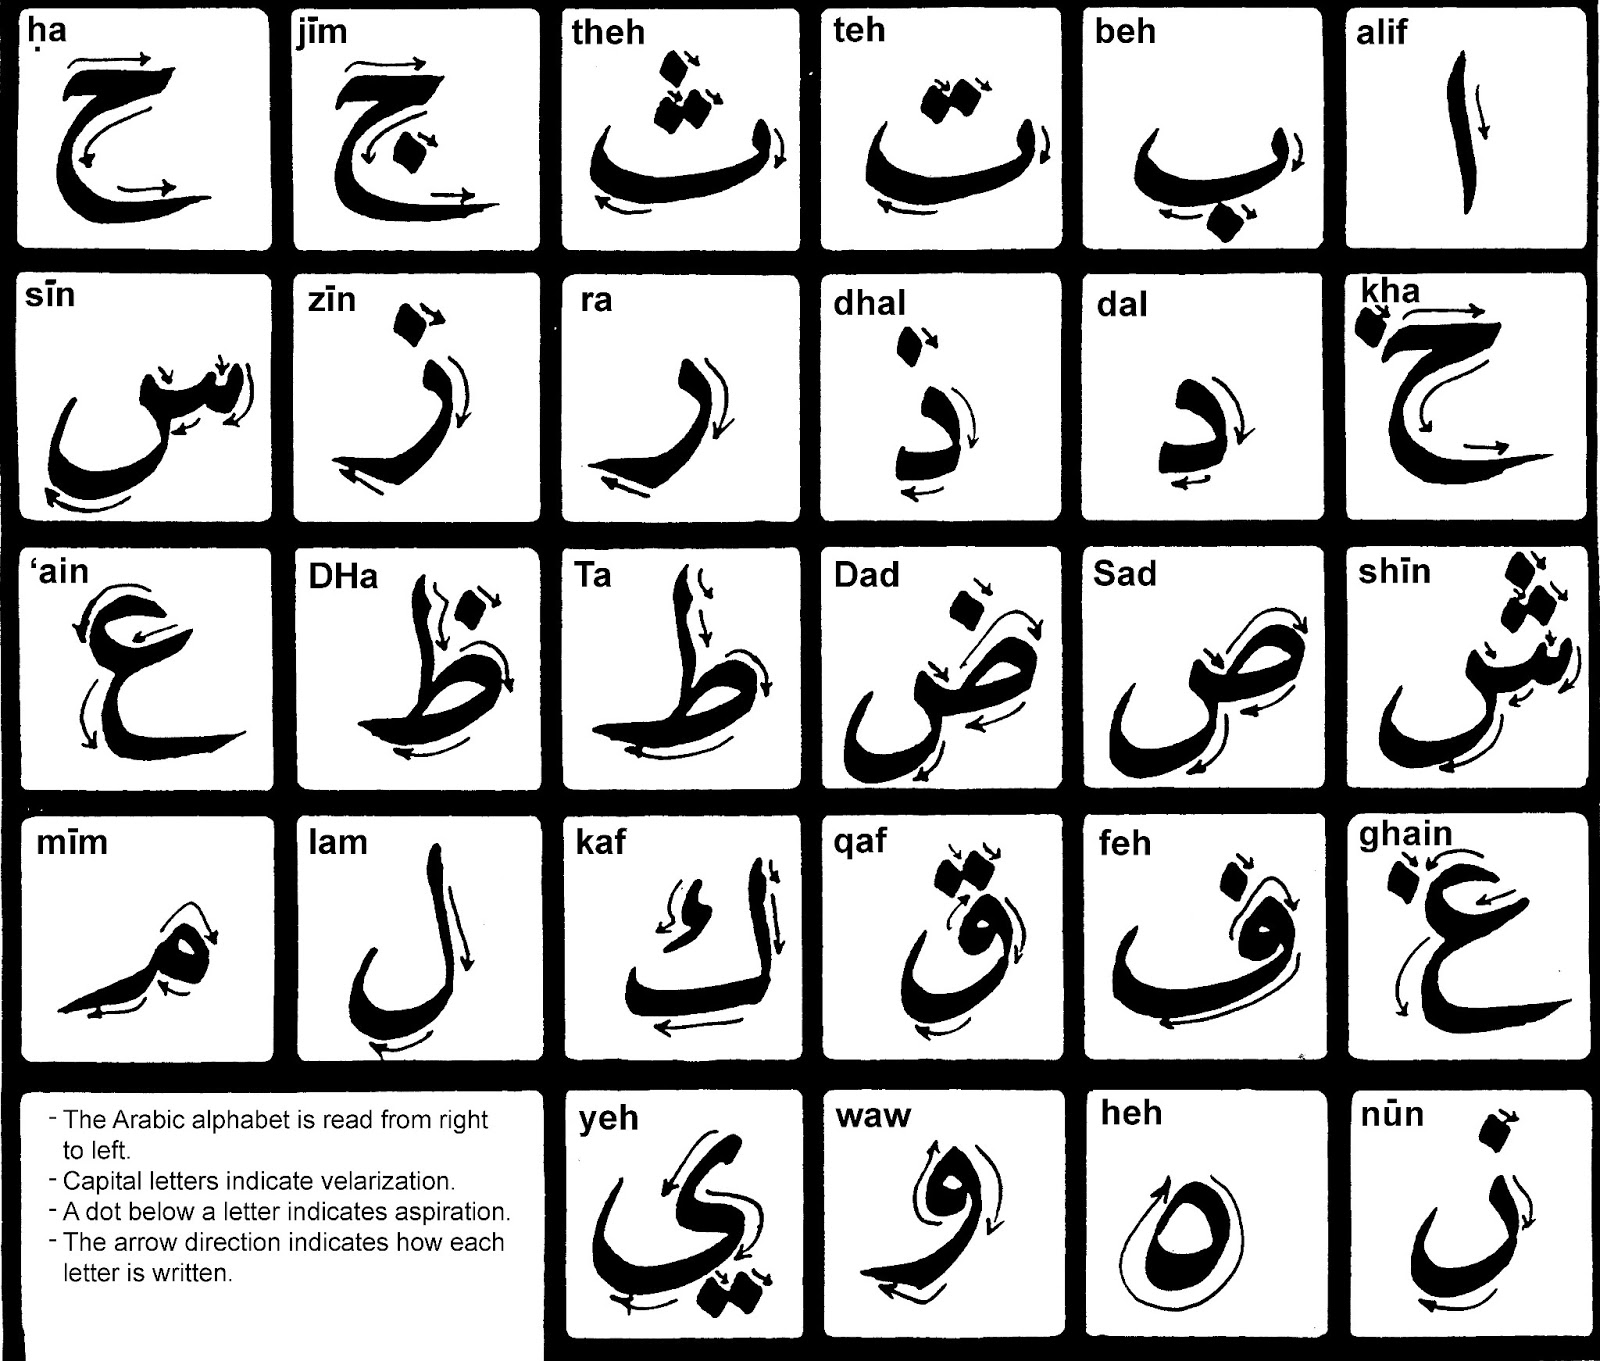 The Polyglot Blog: Arabic Alphabet in Photos, الأبجدية